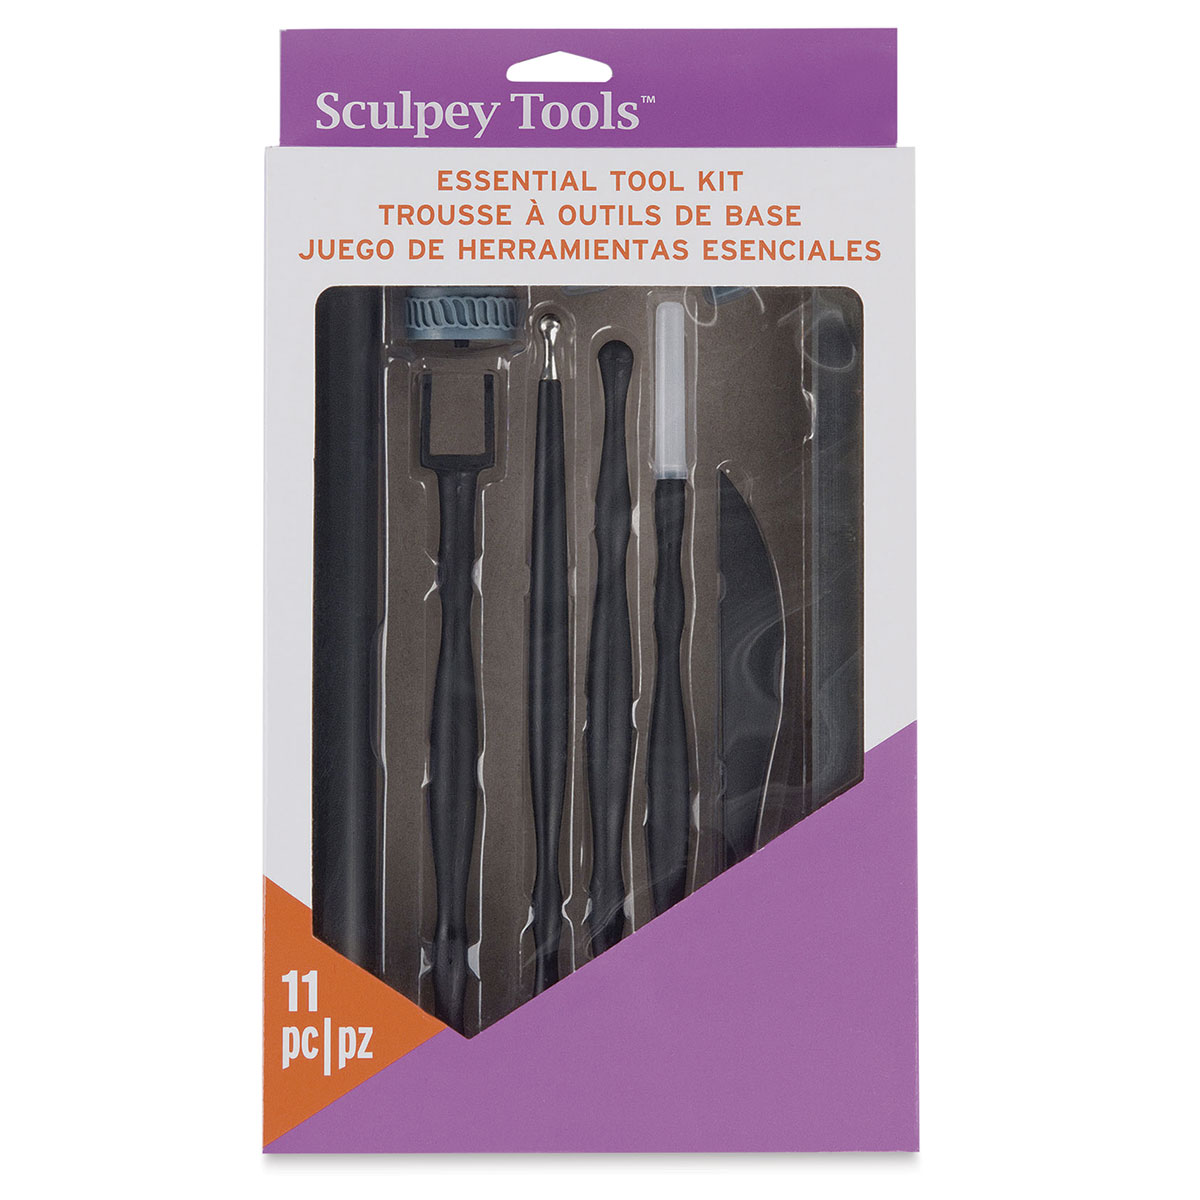 Clay Tools Kit, 22 Pcs Polymer Clay Tools, Ceramics Clay Sculpting Tools  Kits, Air Dry Clay Tool Set A